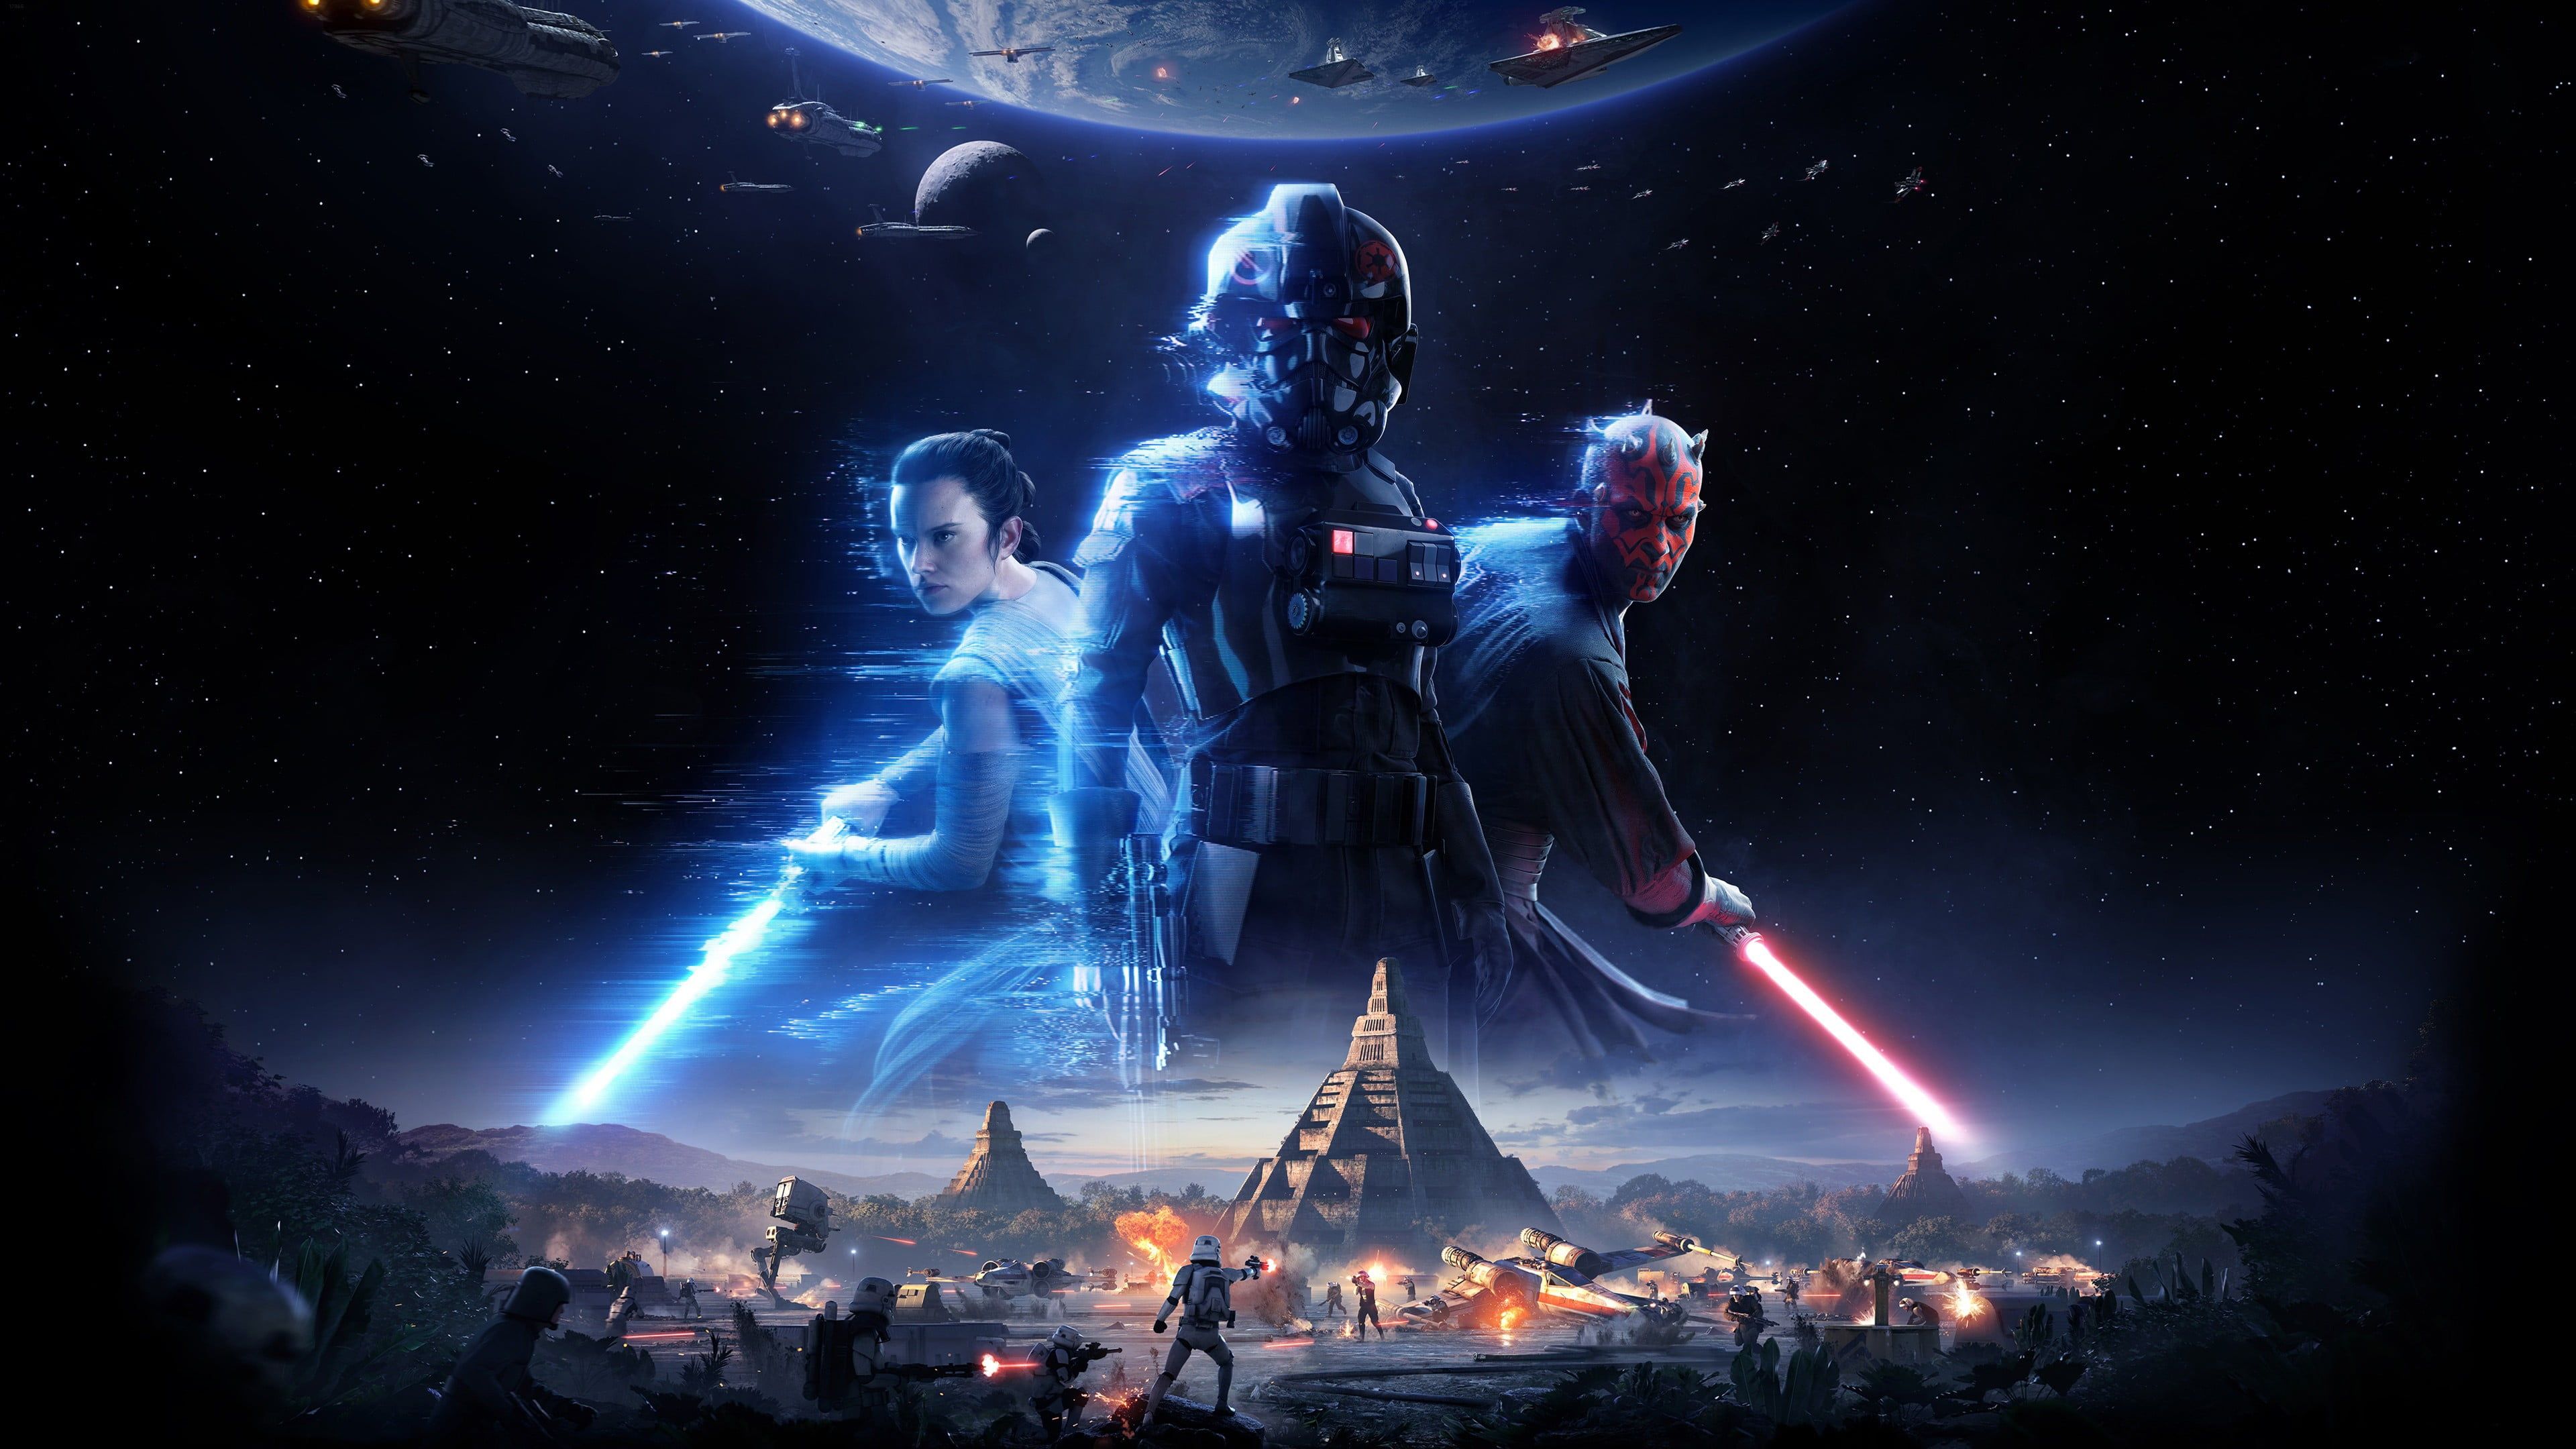 Star Wars 3D wallpaper, Star Wars Battlefront II, Star Wars